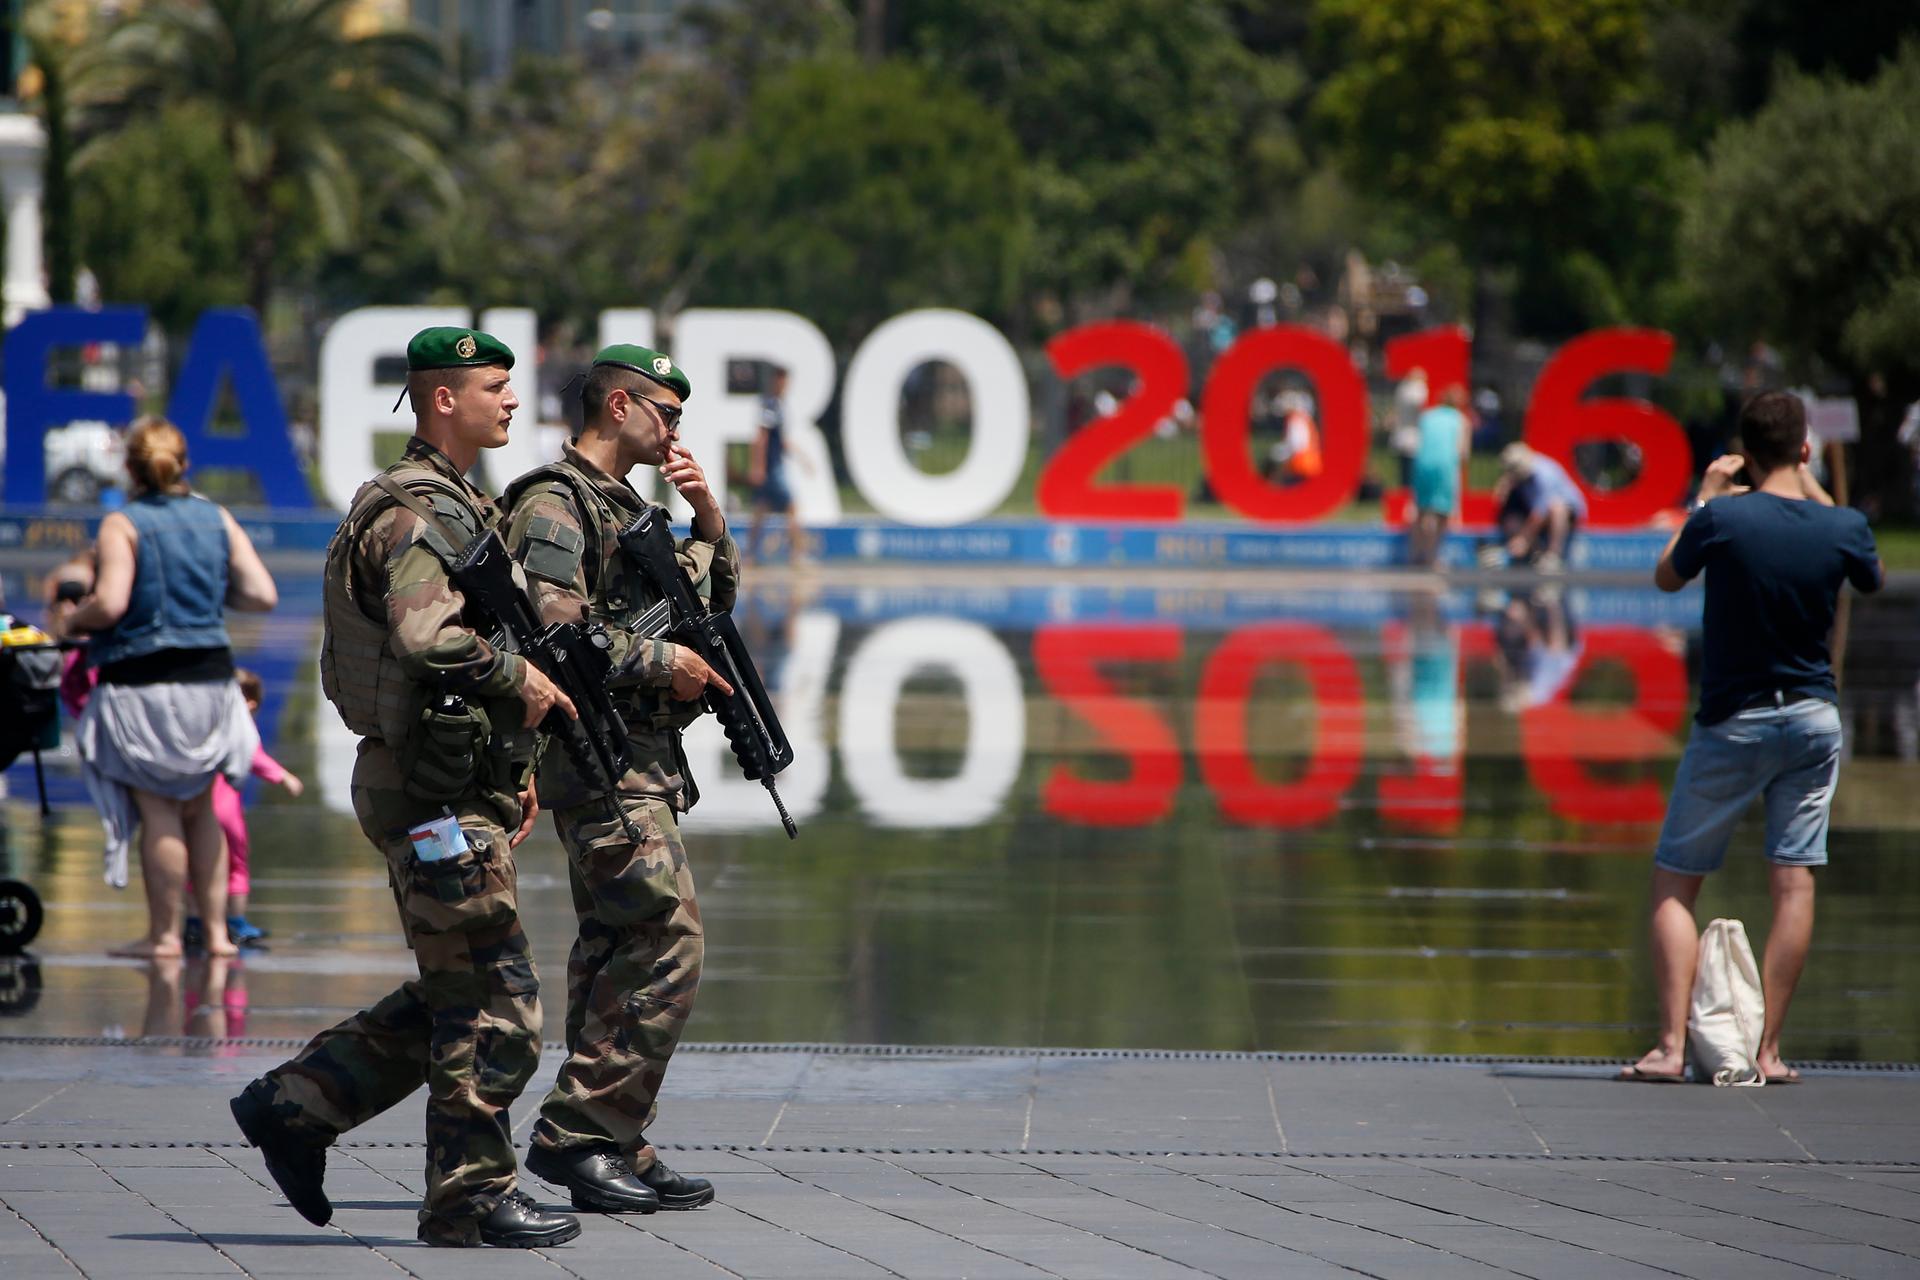 Soldiers patrol ahead of the UEFA 2016 European Championship in Nice, France, June 8, 2016